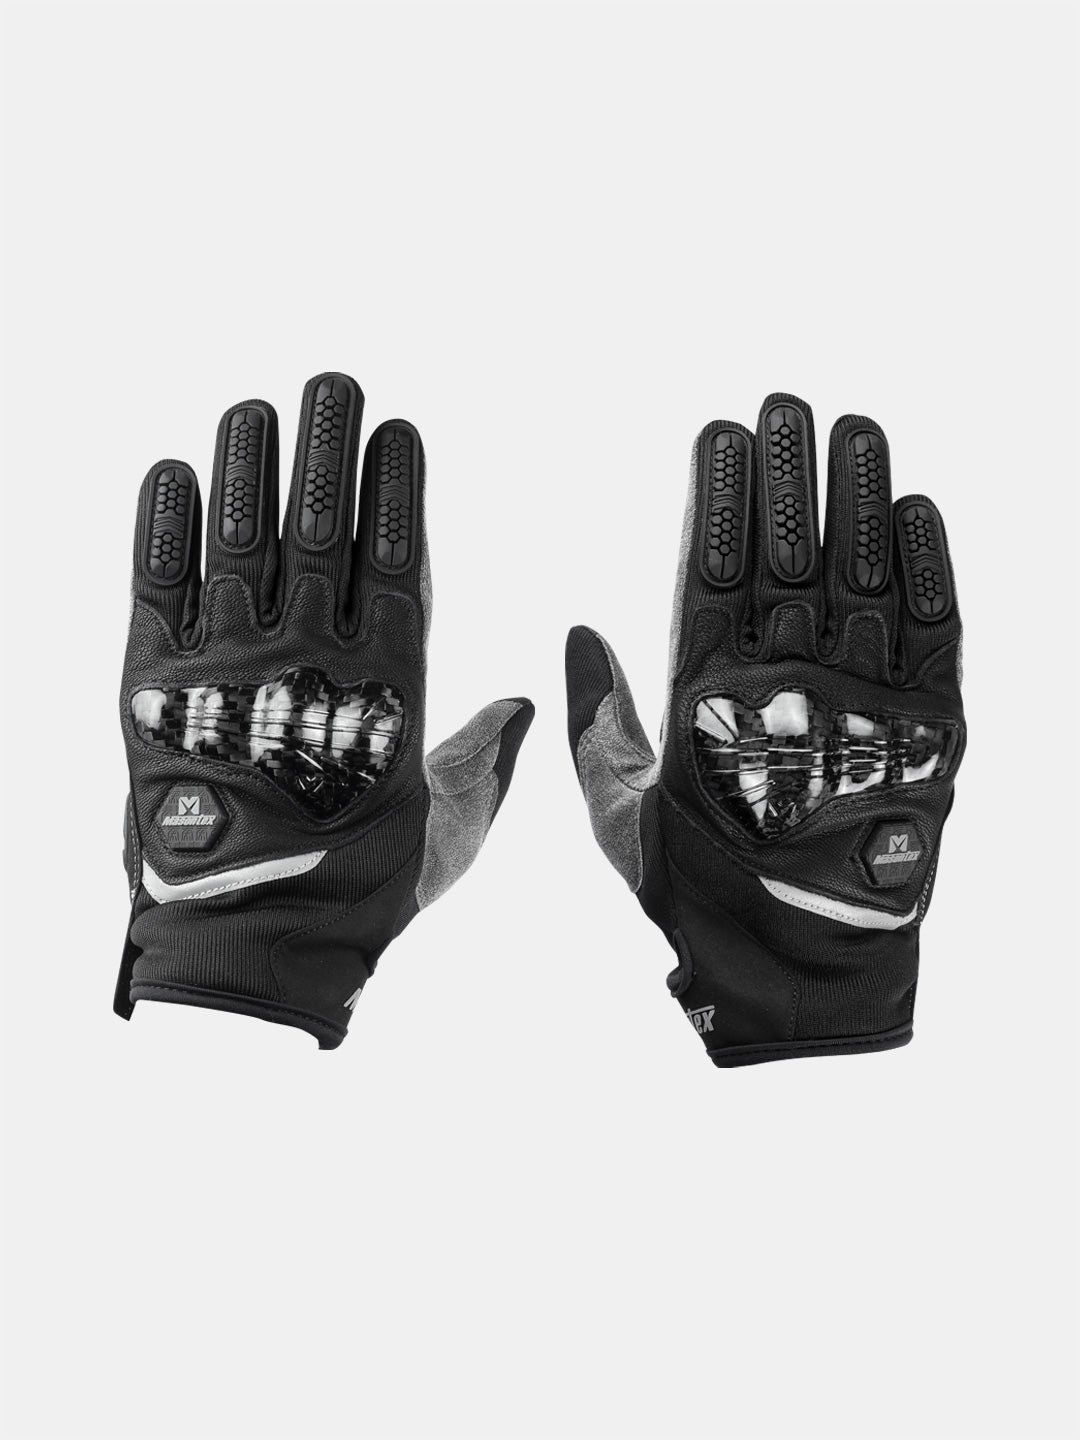 Masontex Gloves M30 Carbon Black